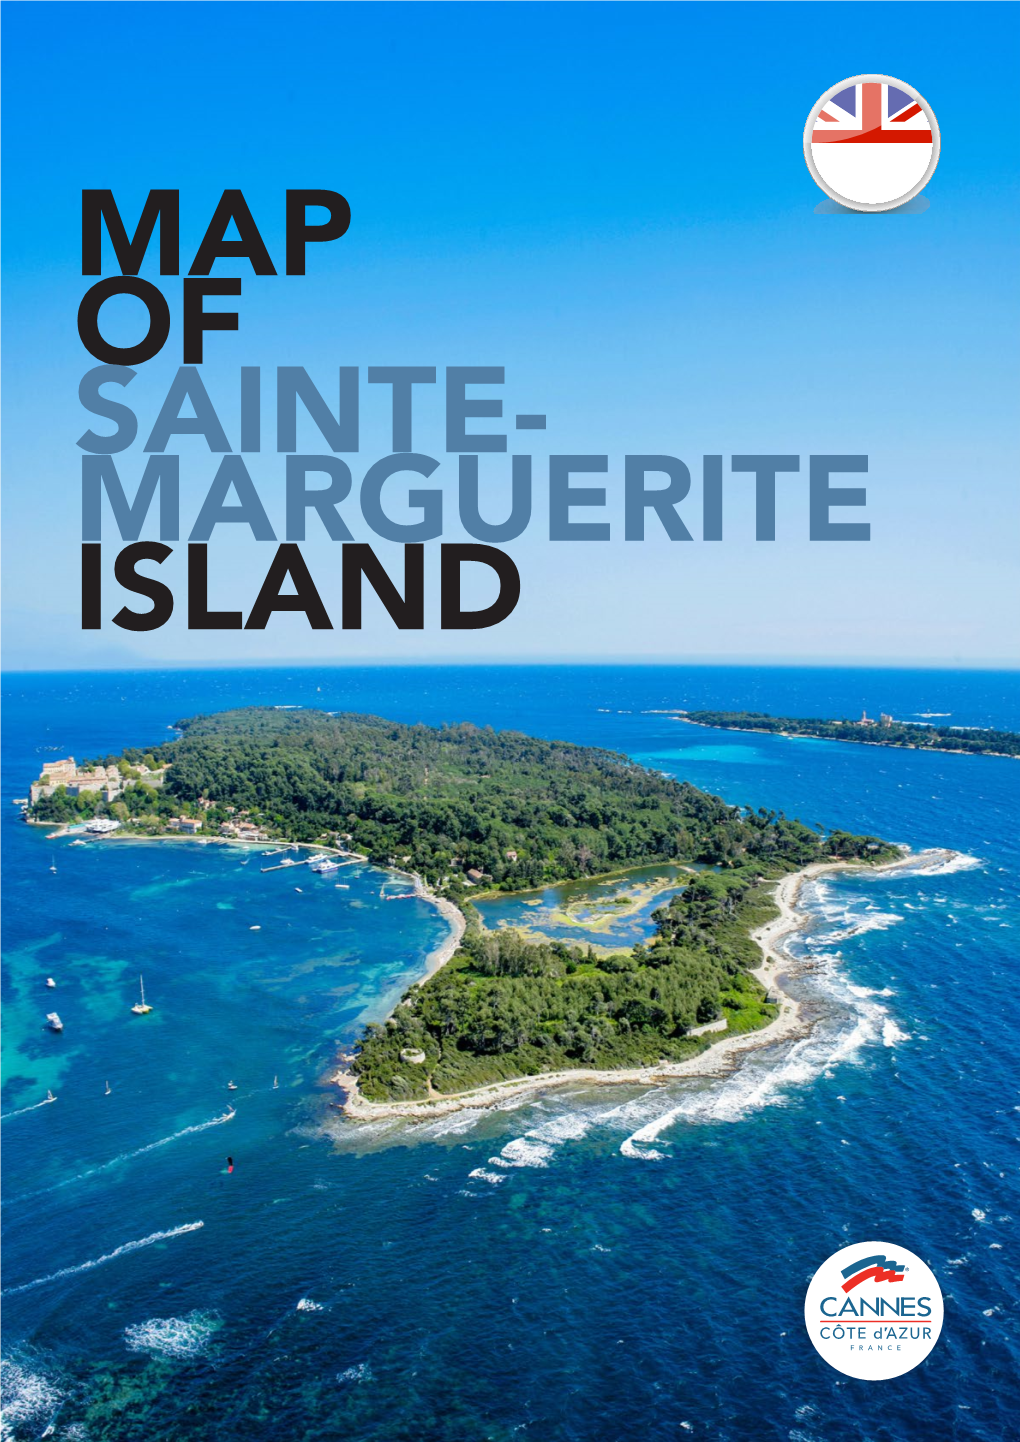 Map of Sainte-Marguerite Island.Pdf